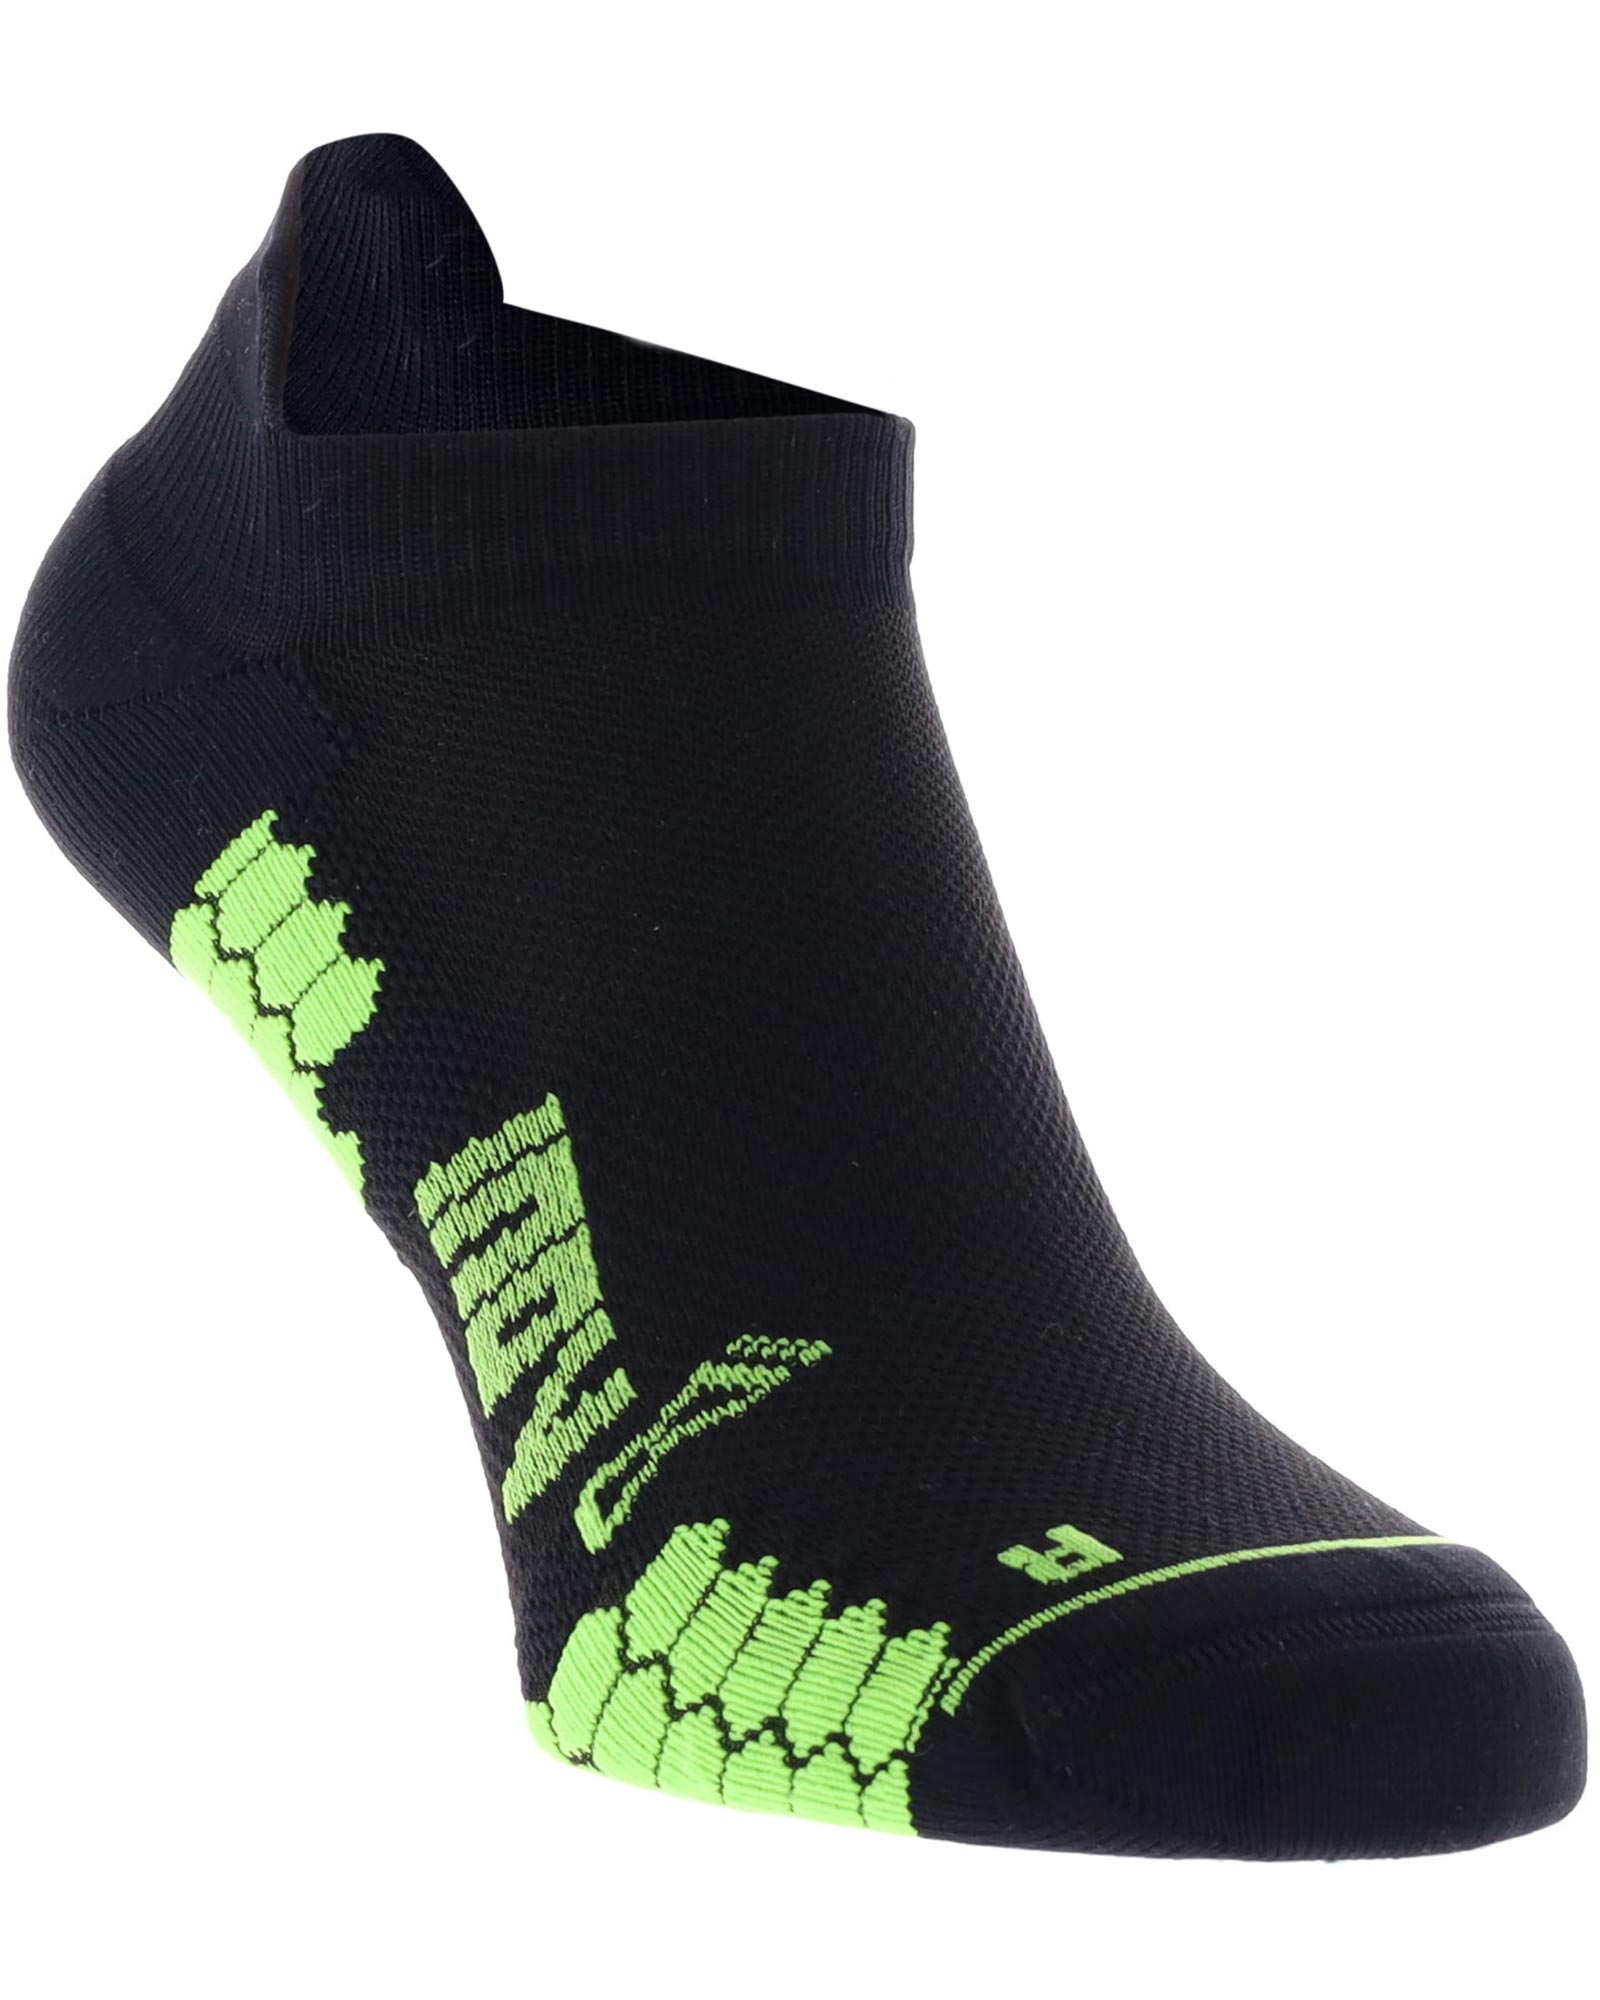 Inov 8 Trailfly Low Socks - Black/Green L